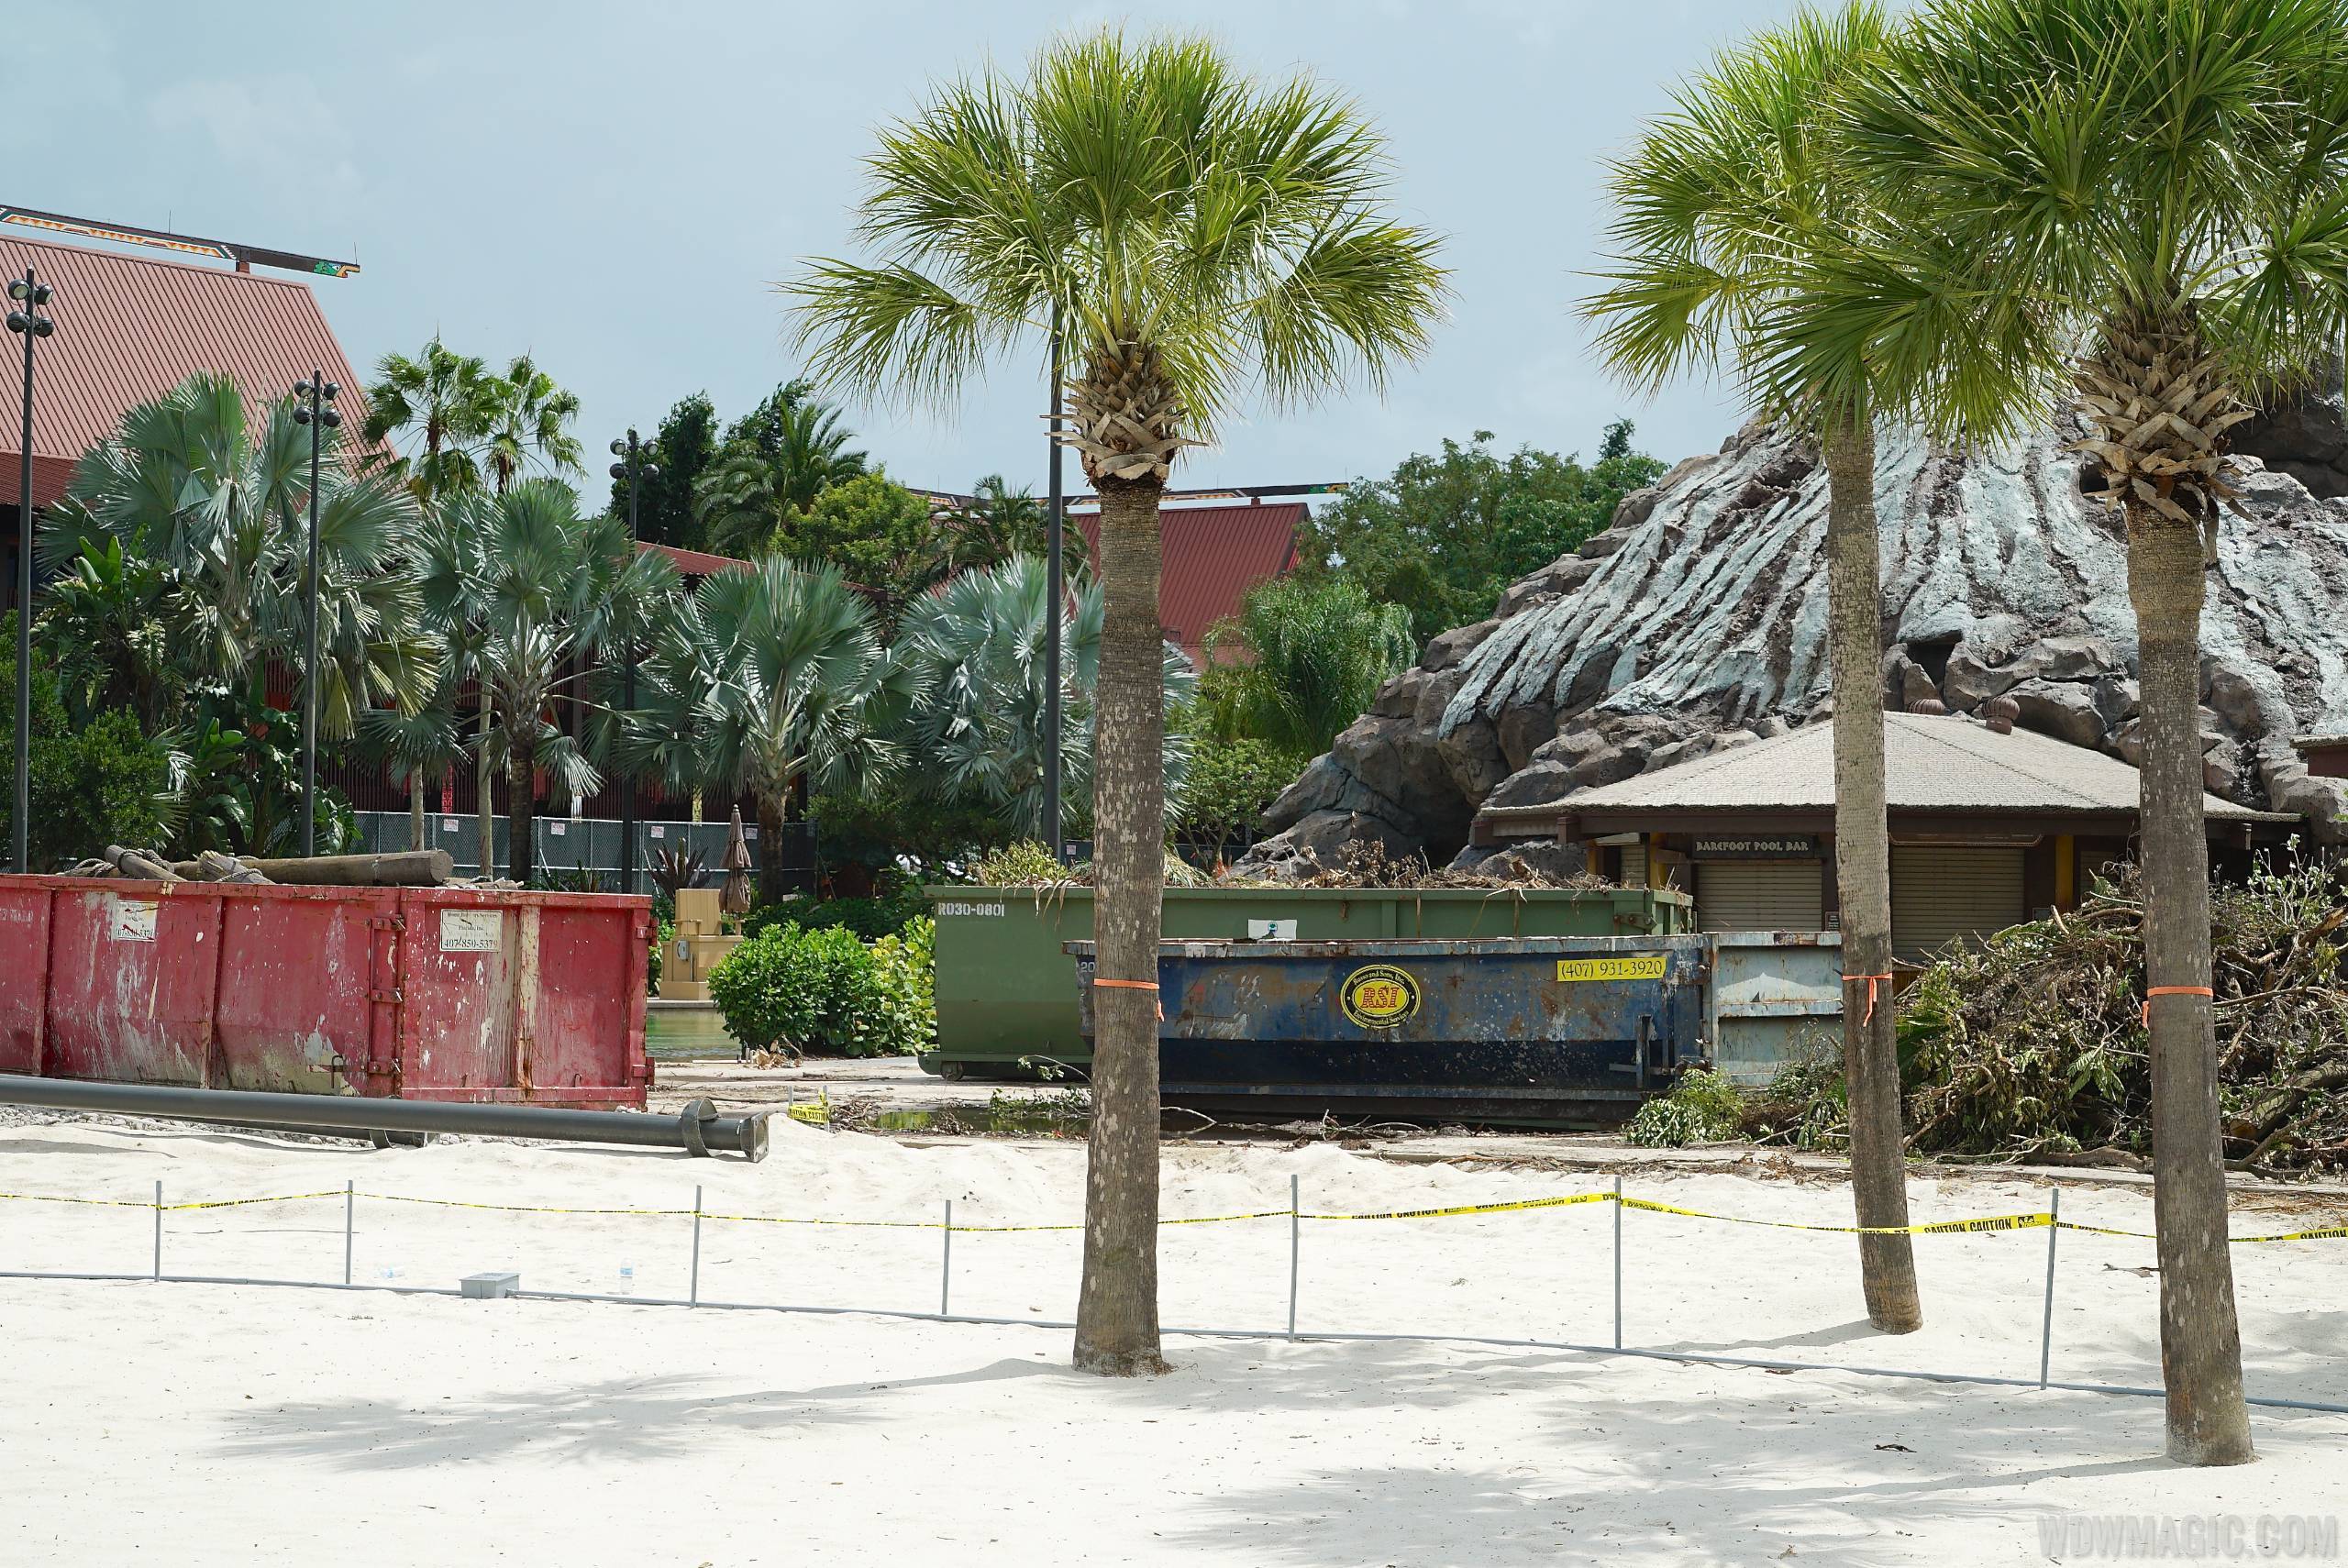 Polynesian Resort pool area redevelopment